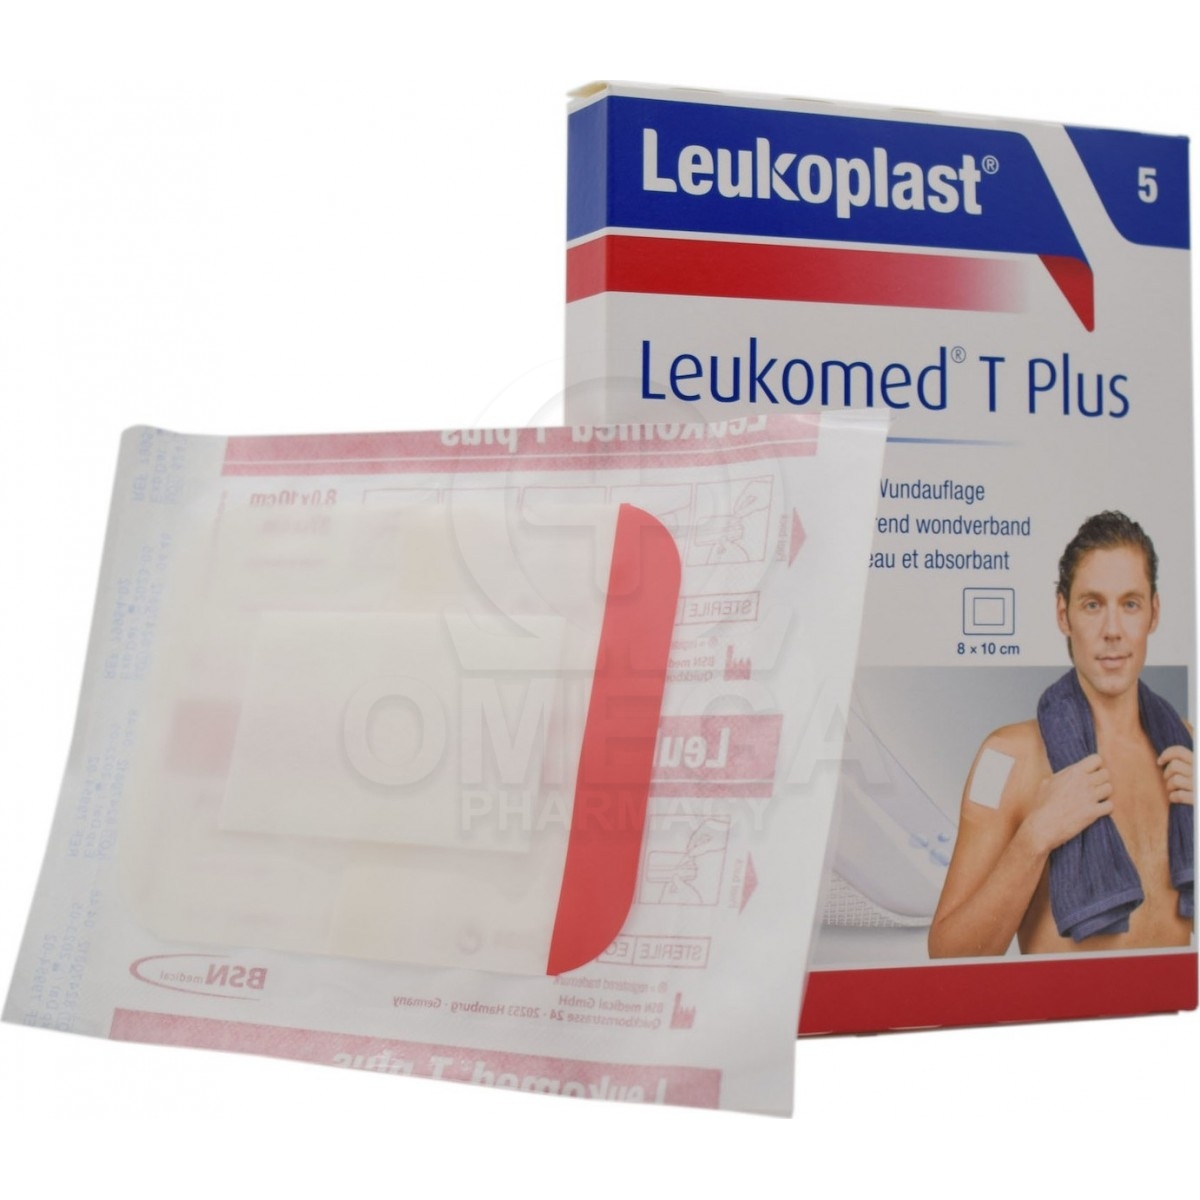 BSN MEDICAL Leukoplast Leukomed T Plus Αποστειρωμένα Αδιάβροχα Αυτοκόλλητα  Επιθέματα 8 x 10cm 5τμχ